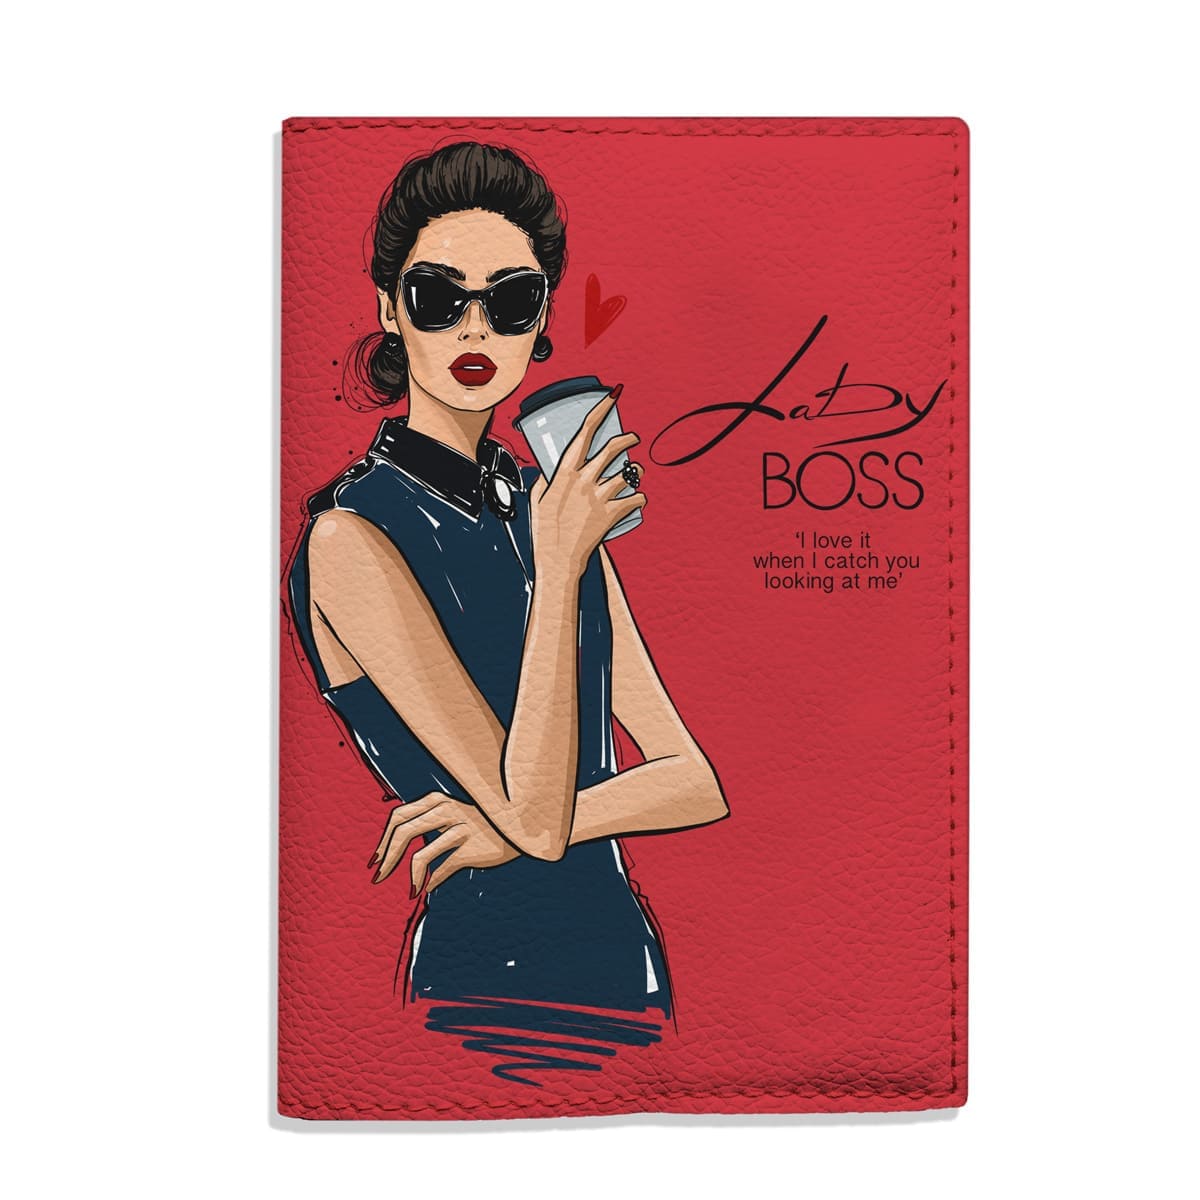 Обкладинка на паспорт Lady BOSS